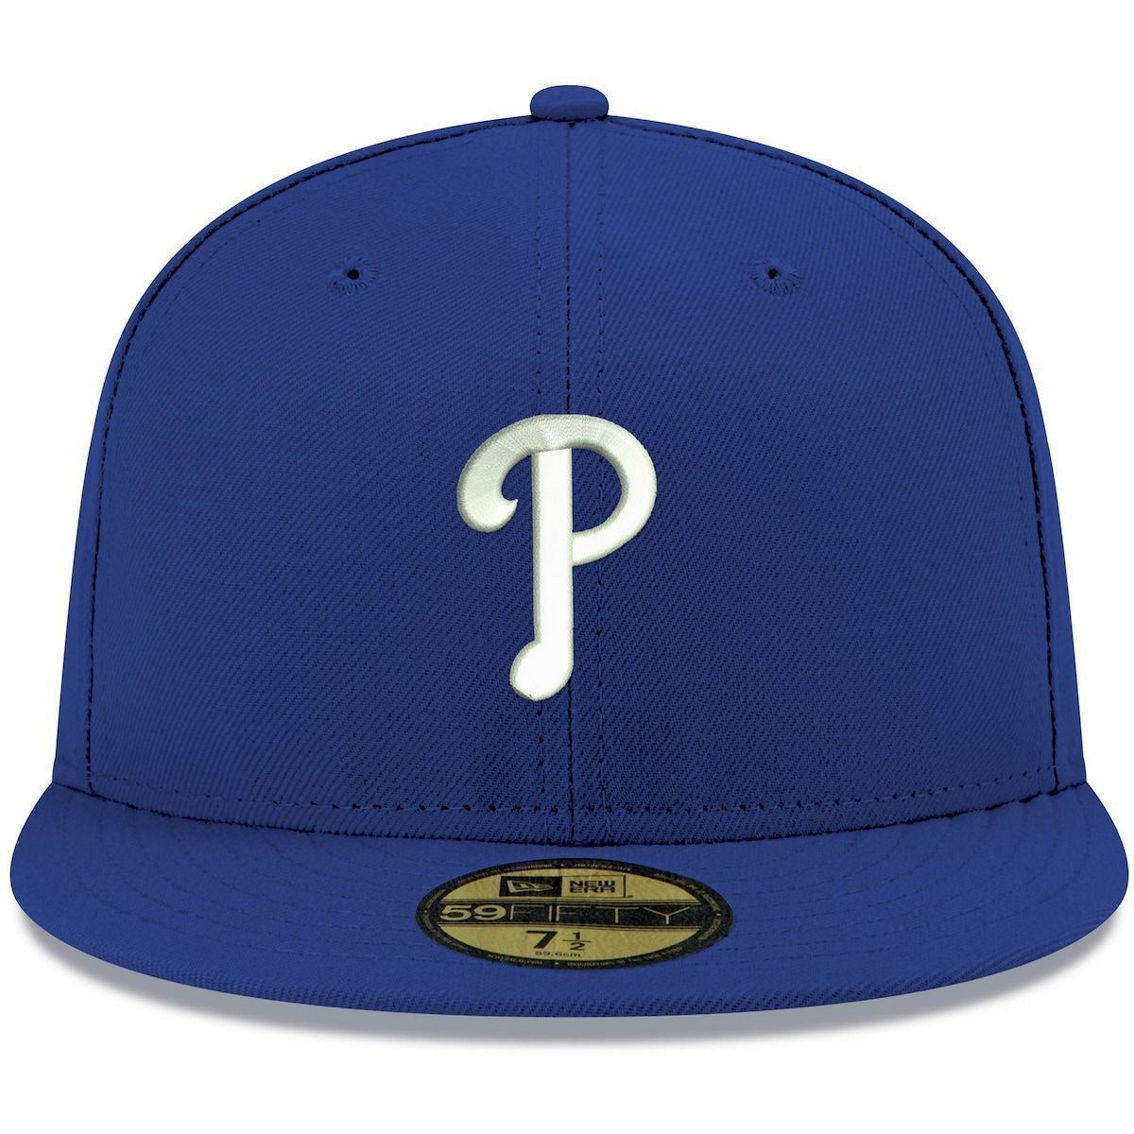 New Era Men's Royal Philadelphia Phillies White Logo 59FIFTY Fitted Hat - Image 3 of 4